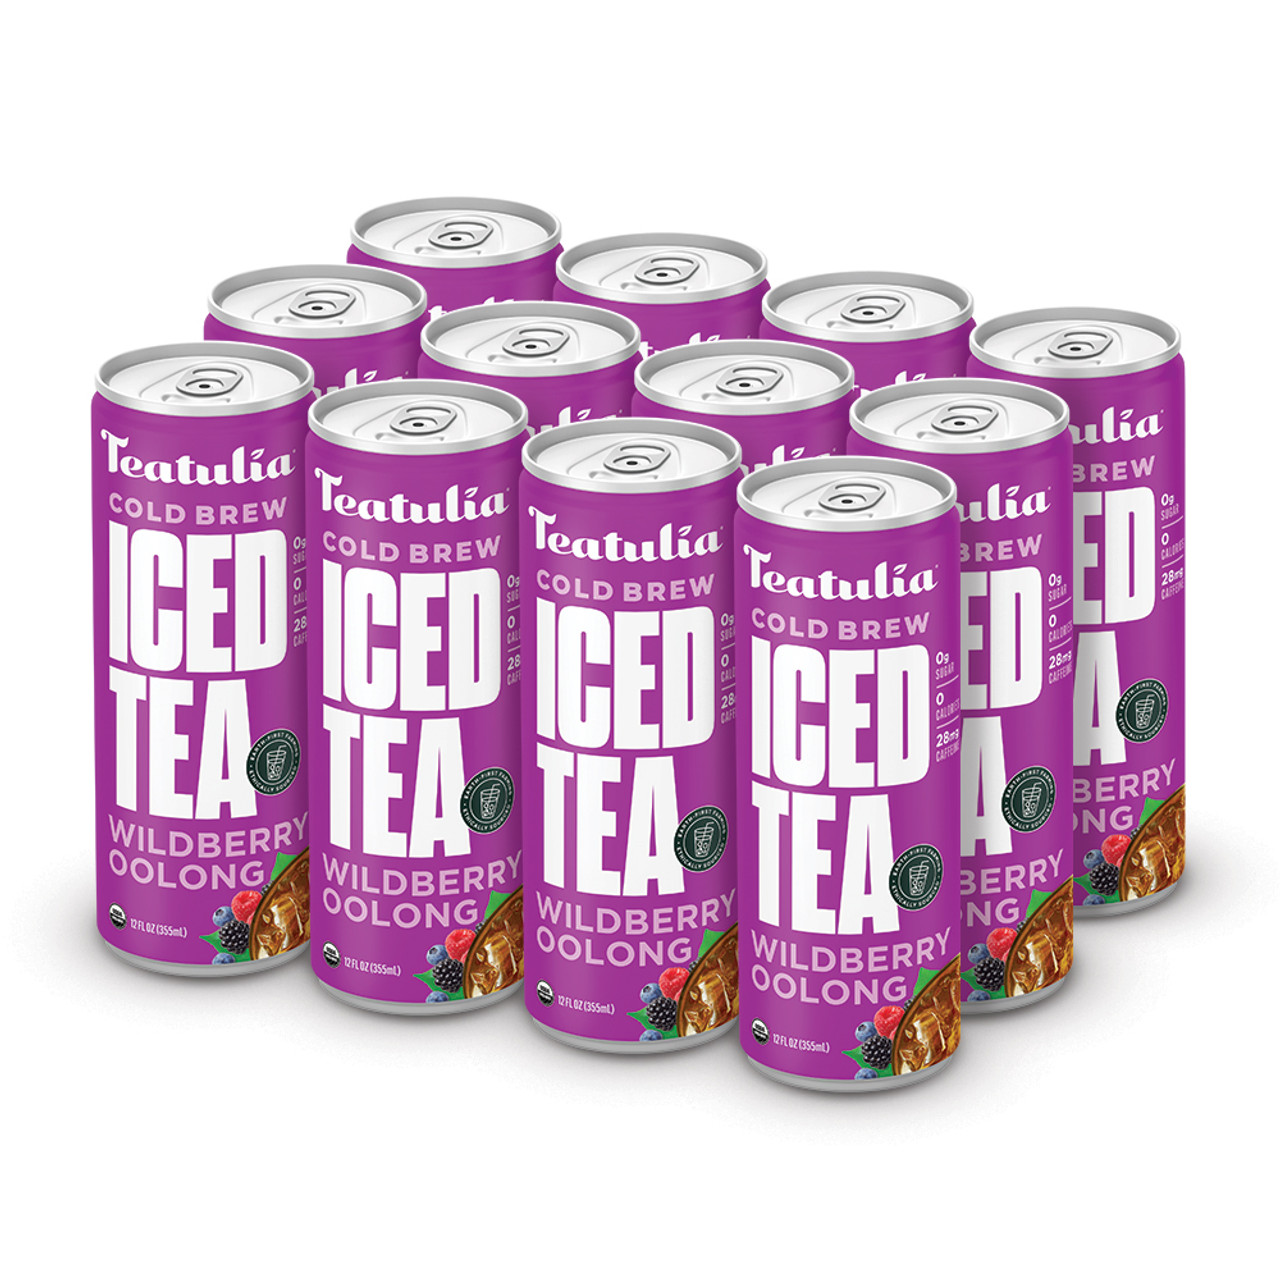 Teatulia Cold Brew Iced Tea Wildberry Oolong 12oz thumbnail